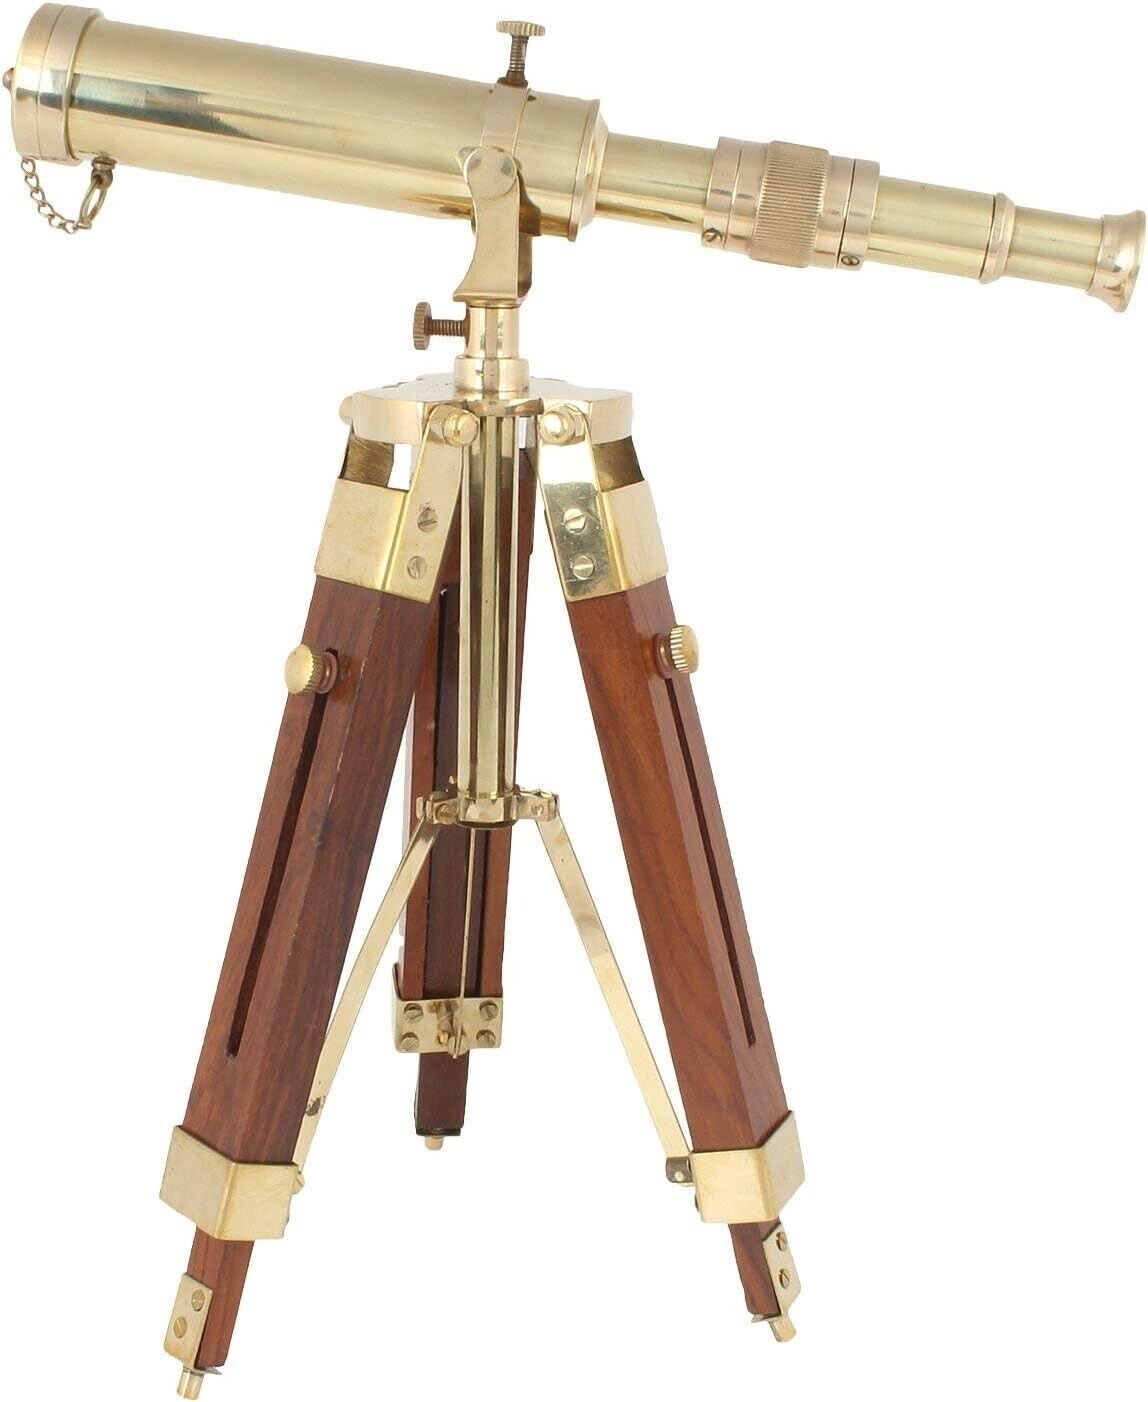 Antique Desktop Brass Telescope Vintage Brass Telescope on Tripod Stand use Lens